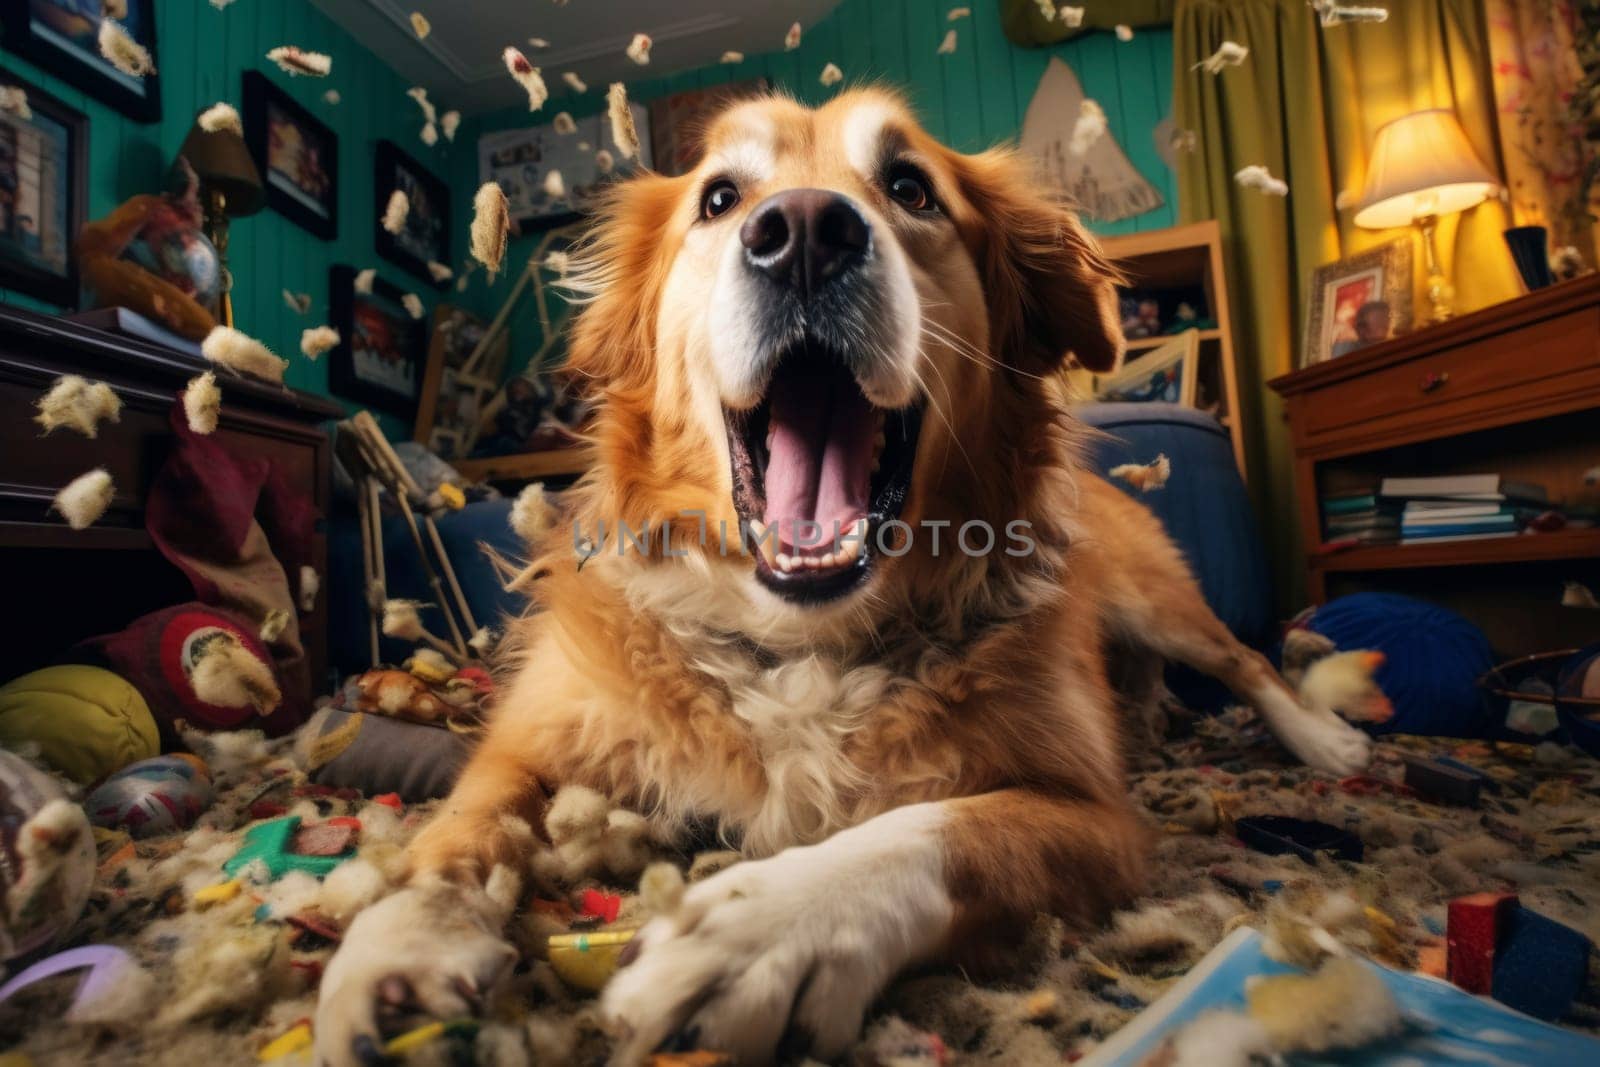 Joyful Dog Amidst Playtime Chaos by andreyz